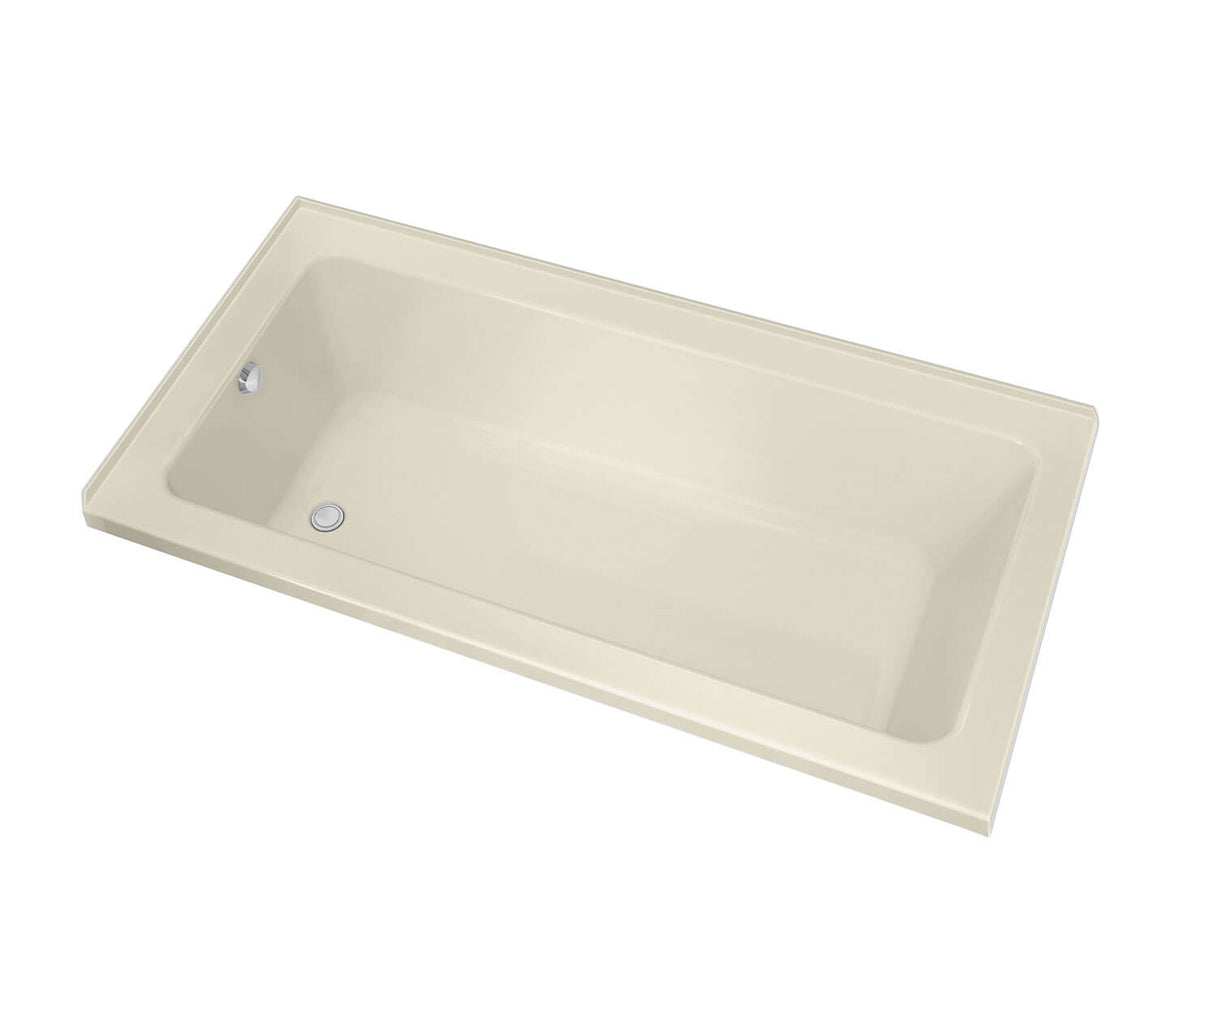 MAAX 106214-L-003-004 Pose 7242 IF Acrylic Corner Left Left-Hand Drain Whirlpool Bathtub in Bone